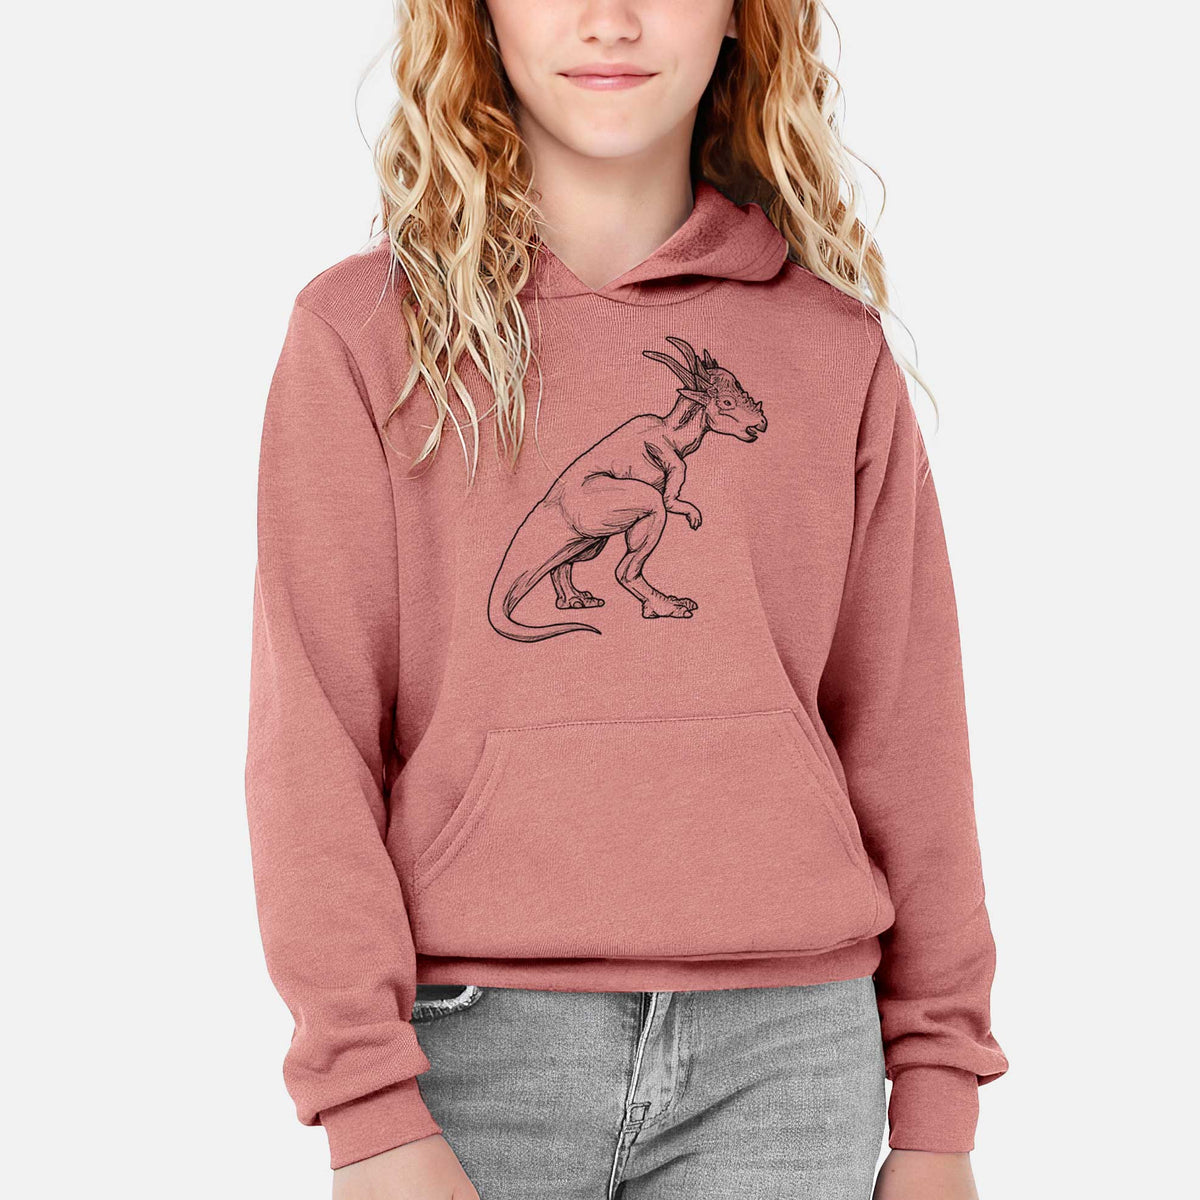 Stygimoloch - Youth Hoodie Sweatshirt